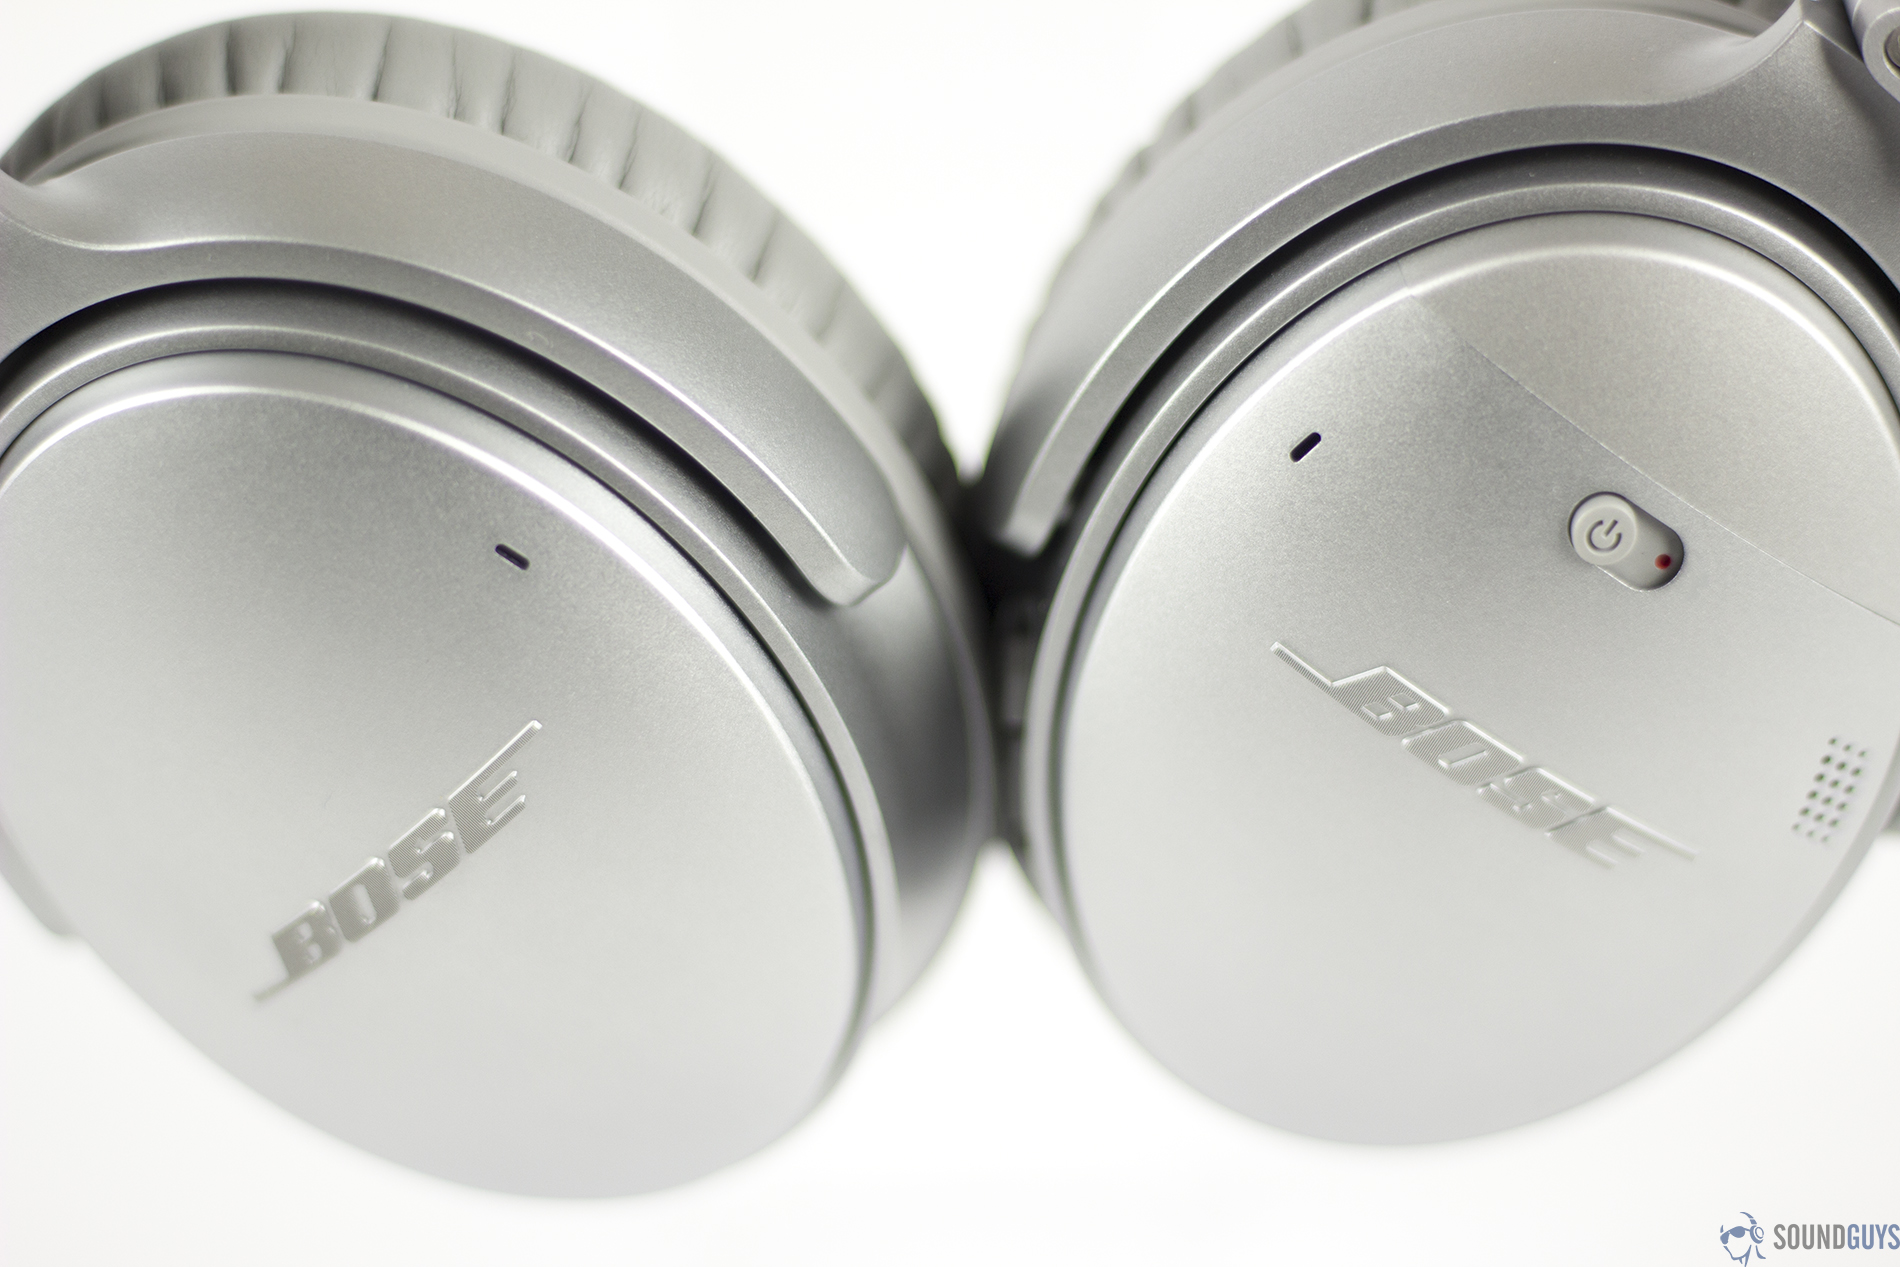 Bose QuietComfort Headphones review - SoundGuys